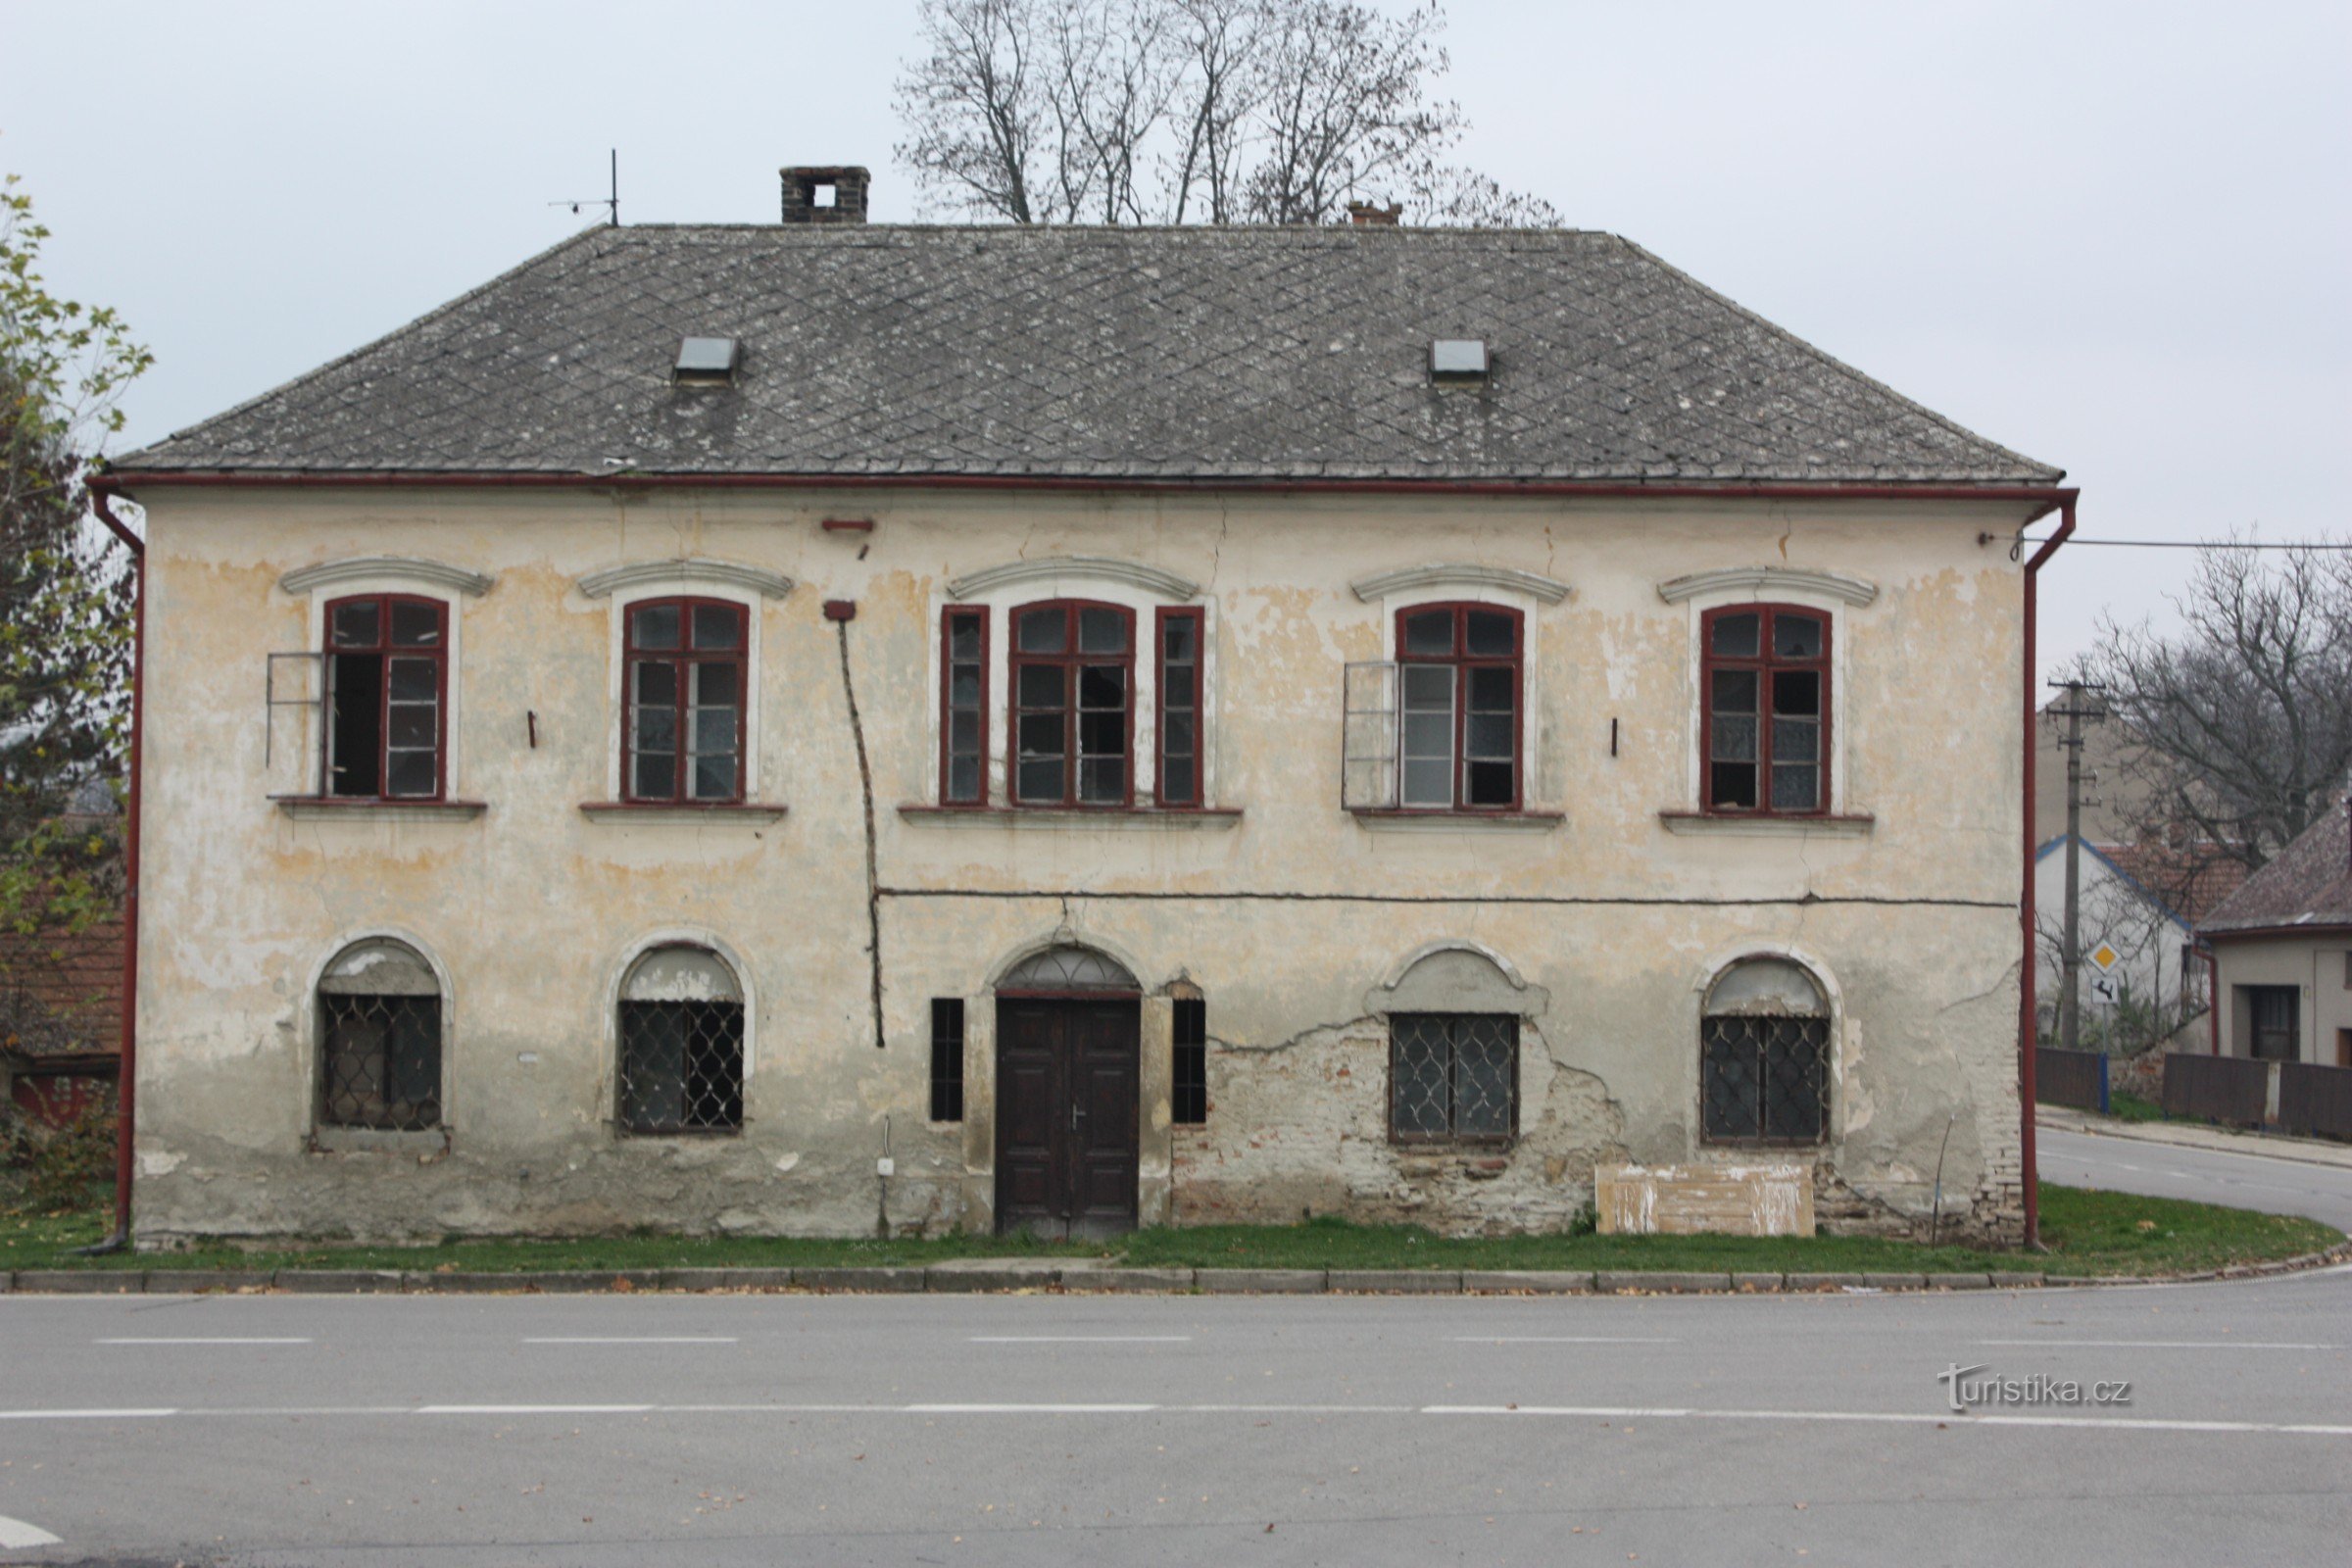 The old (original) parsonage in Bohdalice